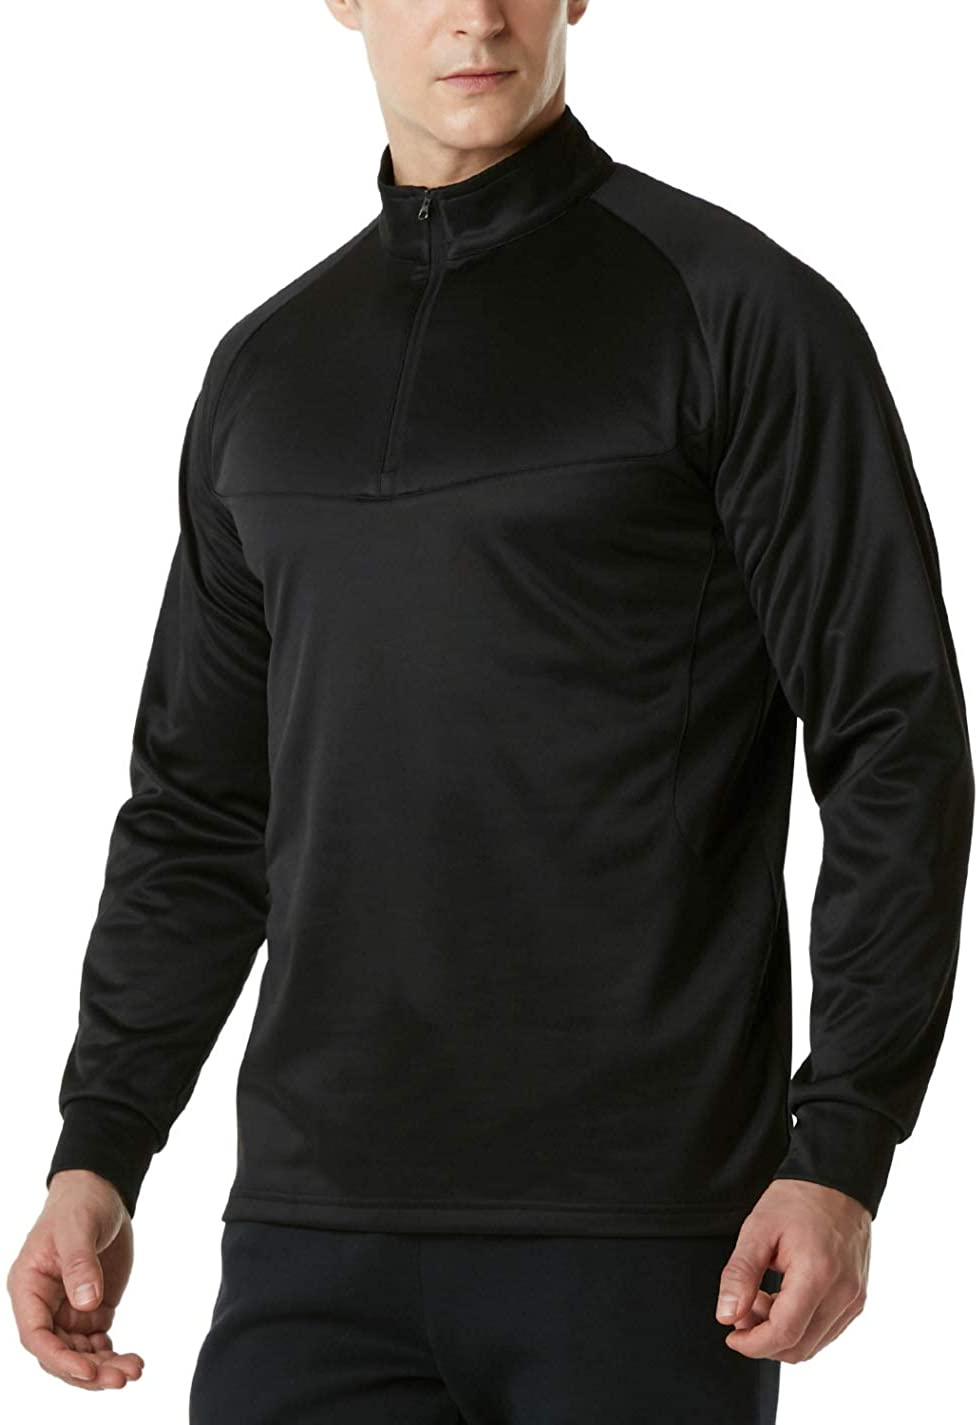 TSLA Mens Quarter Zip Thermal Pullover Shirts Winter Fleece Lined Lightweight Running Sweatshirt